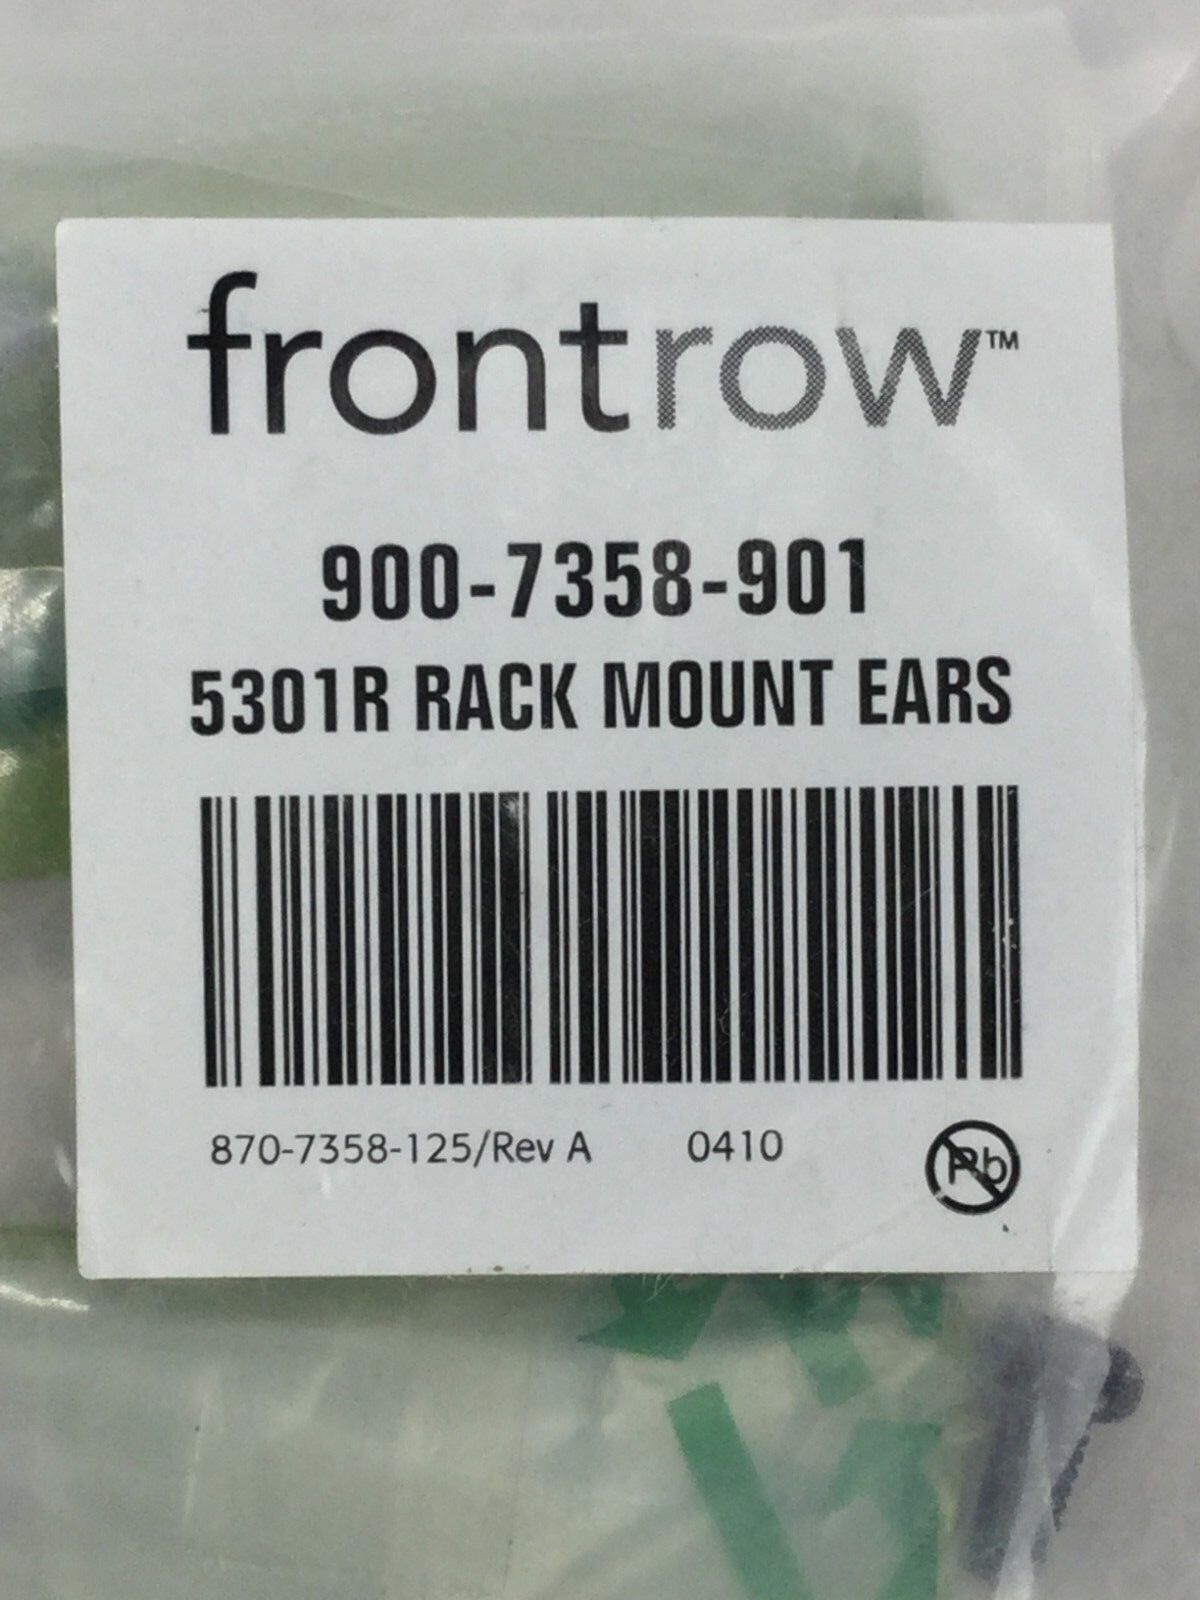 Frontrow 900-7358-901  5301R Rack Mount Ears Kit w/ Screws